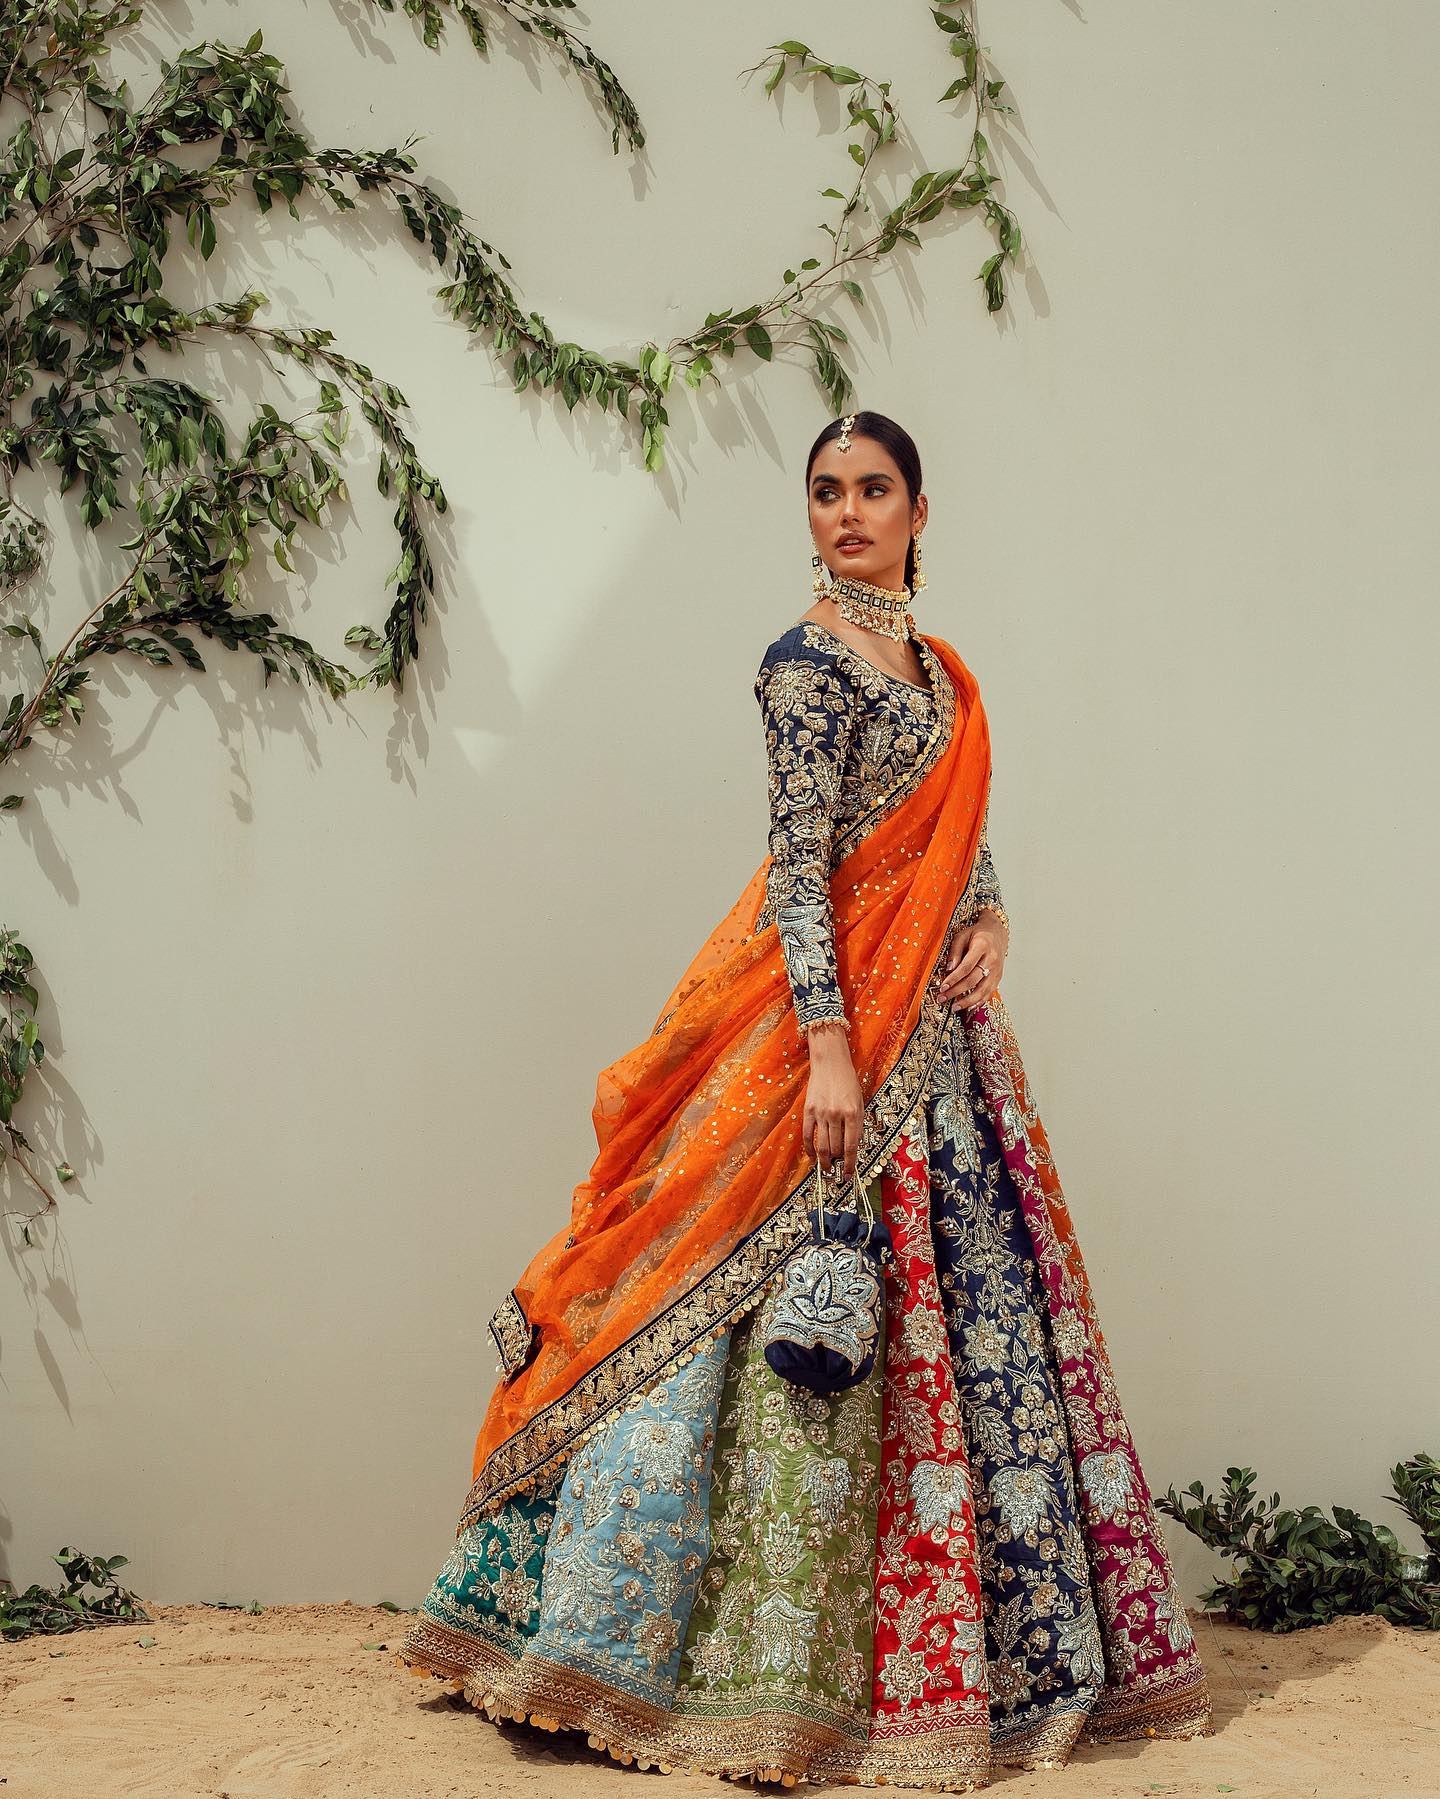 Pakistani Bridal Lehenga Collection: Traditional Elegance Meets Modern  Style - Classy Corner